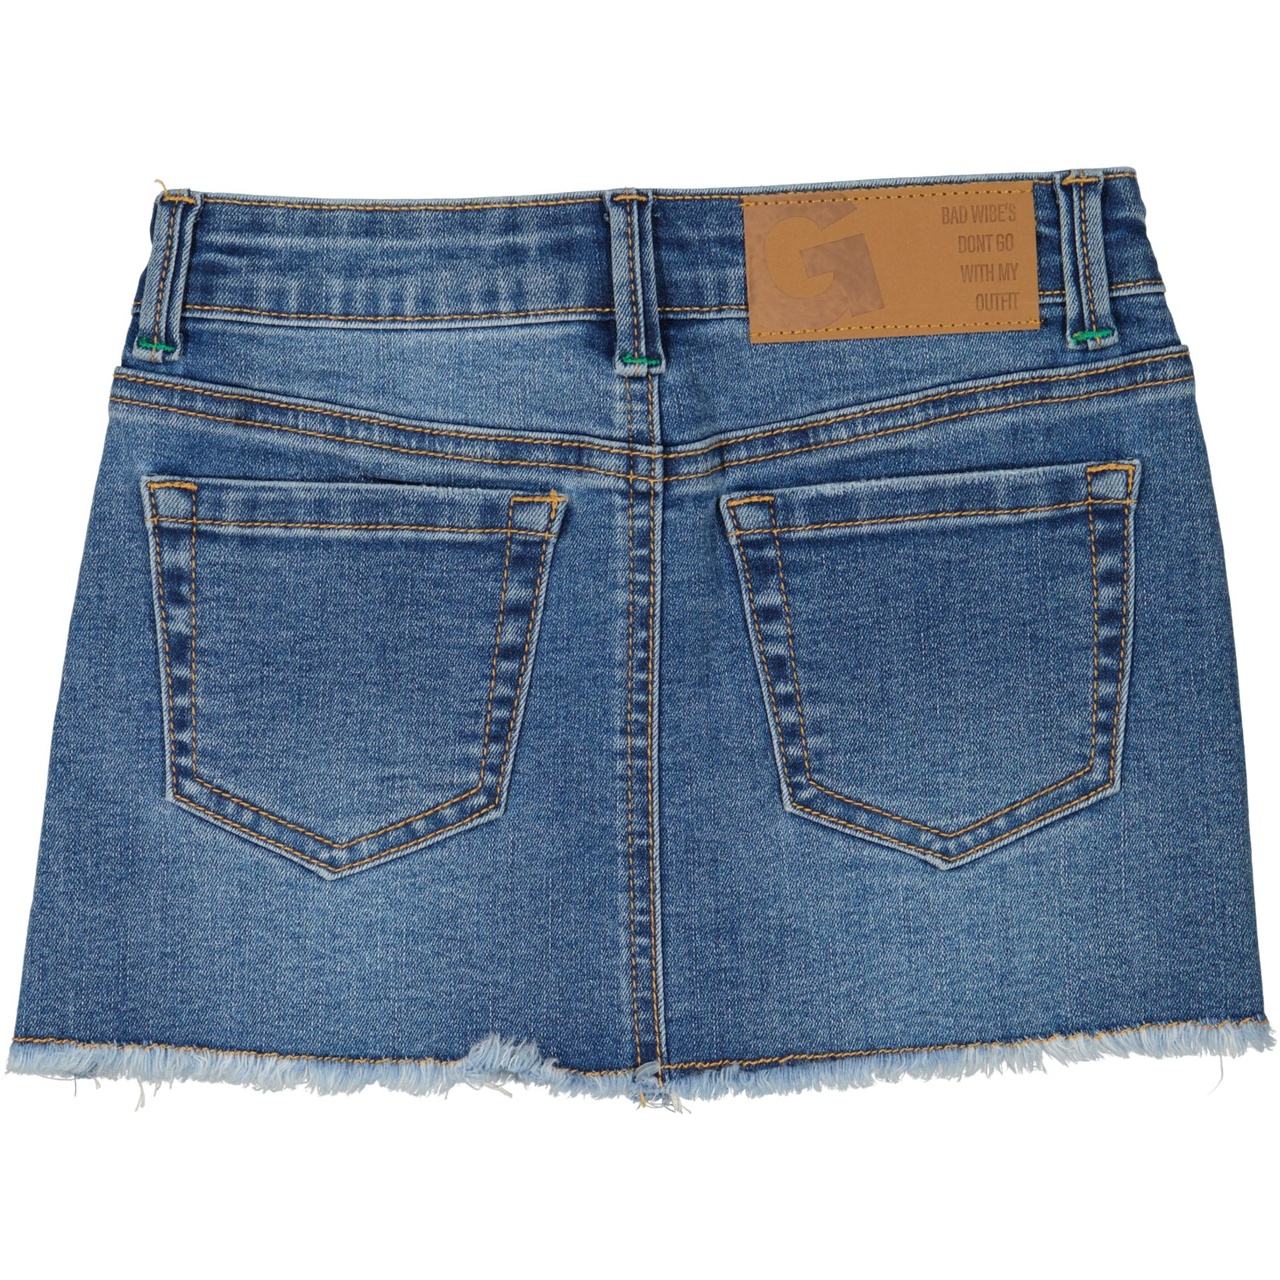 Jeans skirt Denim blue wash 110/116